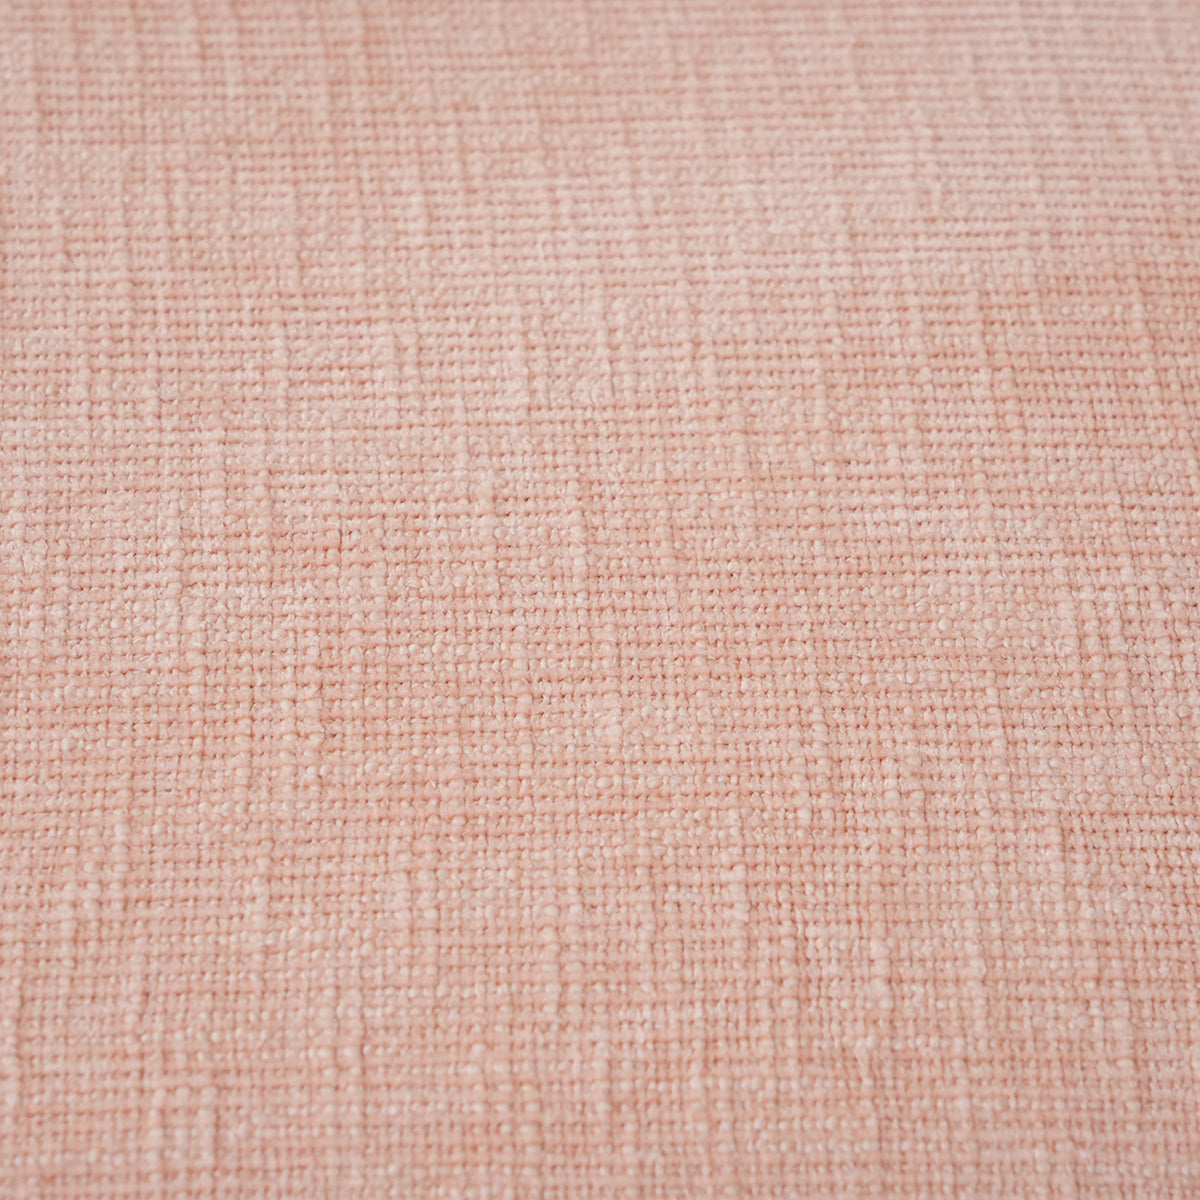 Tranquil Essence Burb Slub Viscose Blend Soft Weaved Peach 8 PC Bed Cover Set